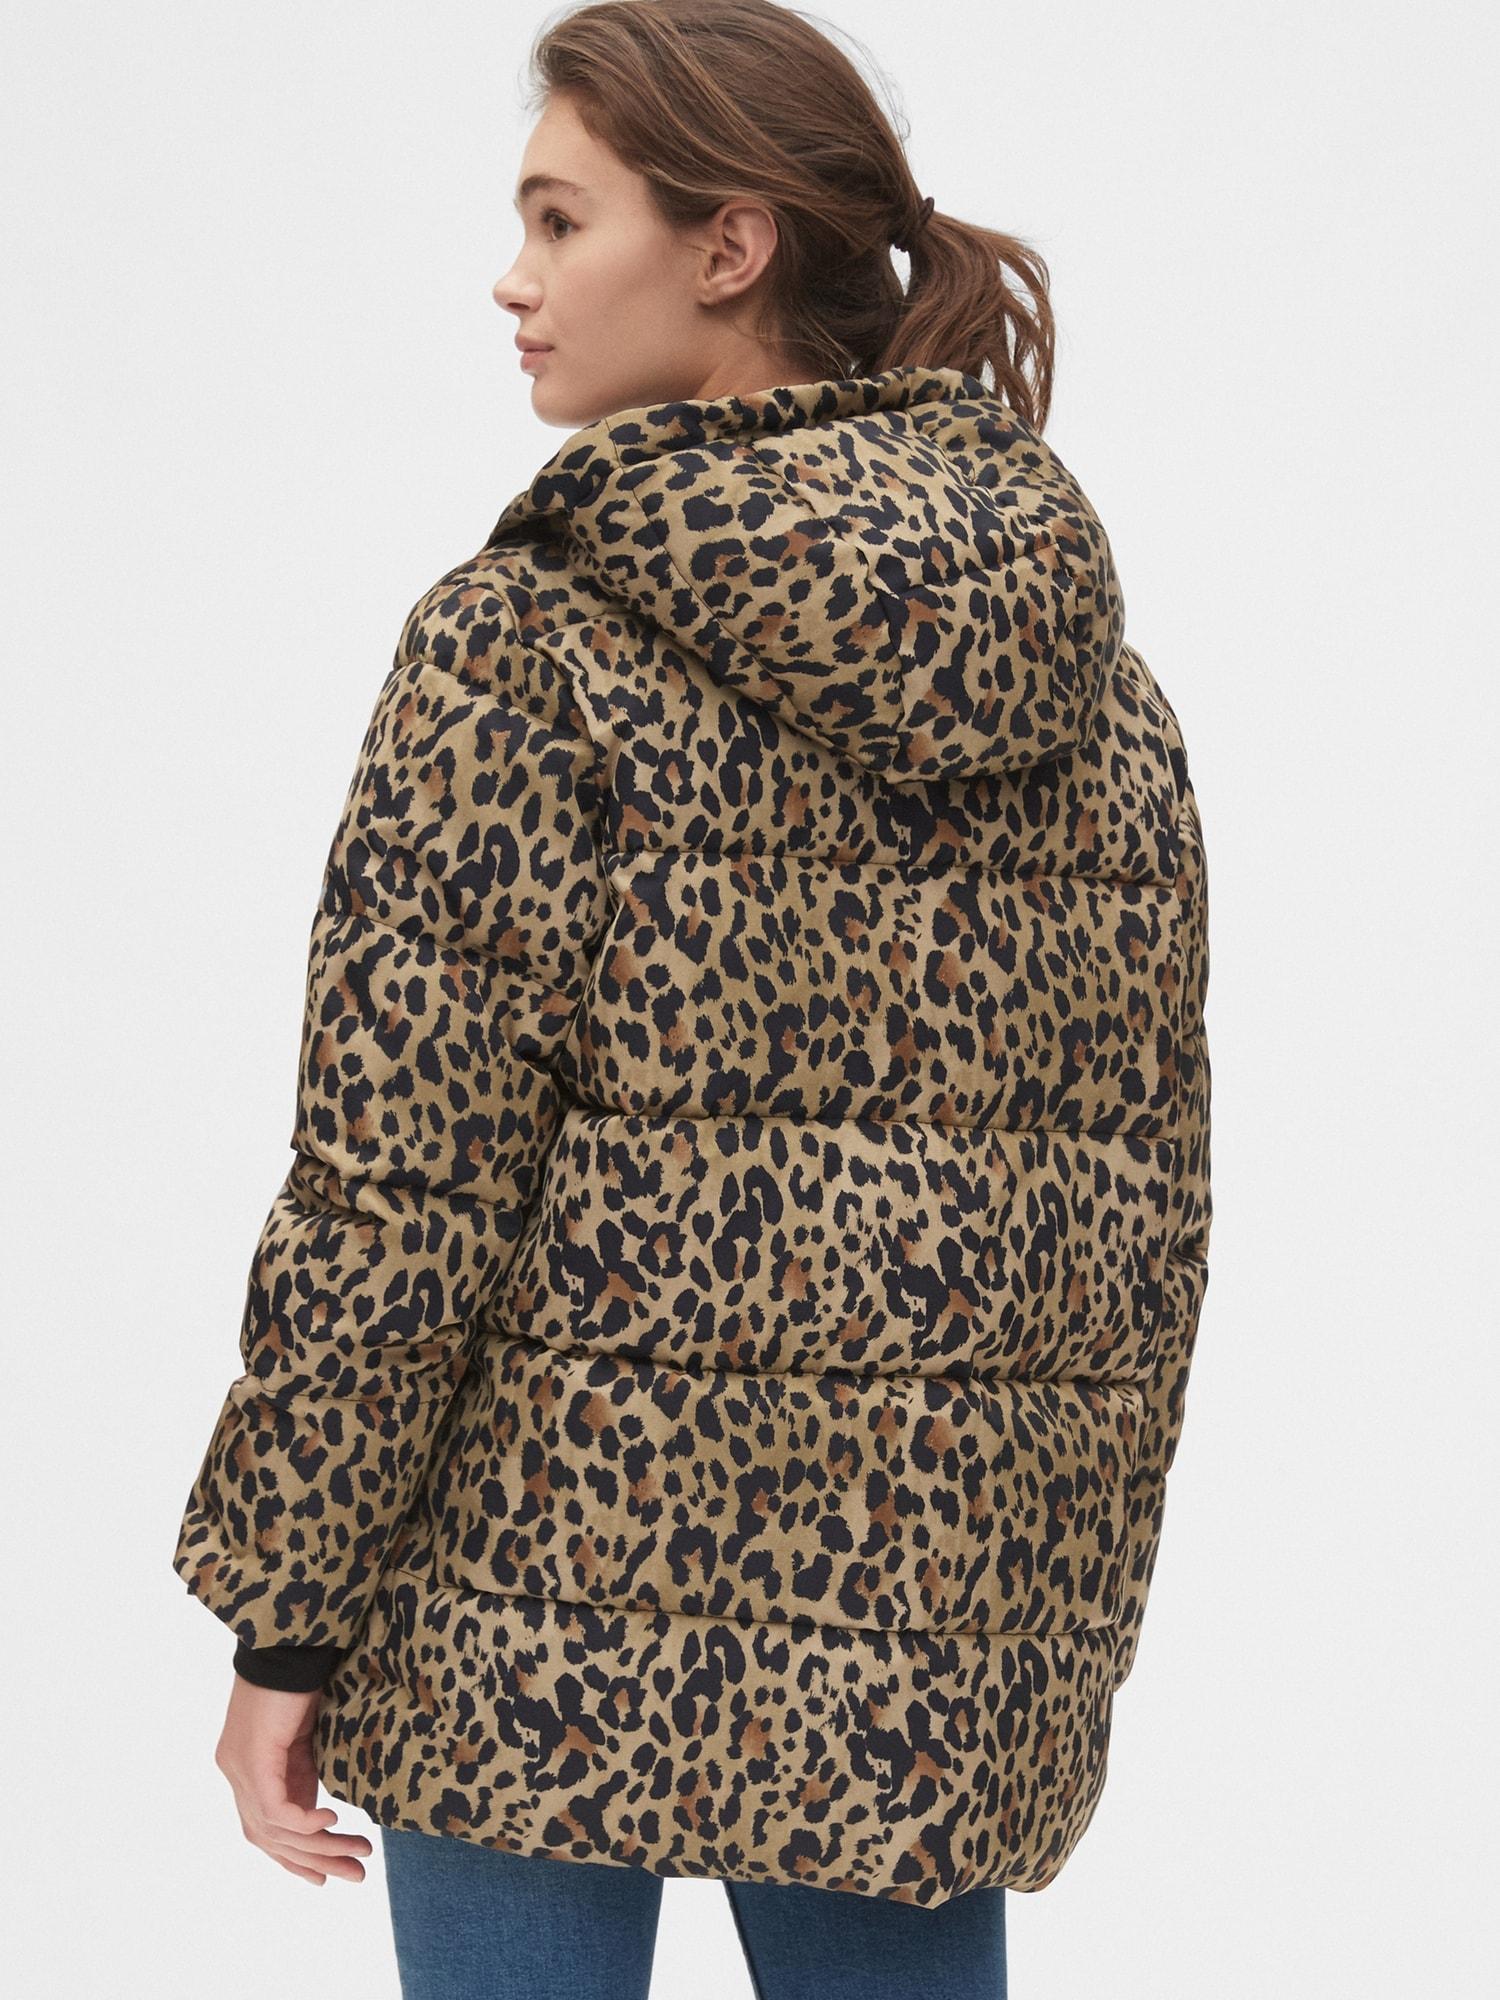 gap leopard jacket,connectintl.com